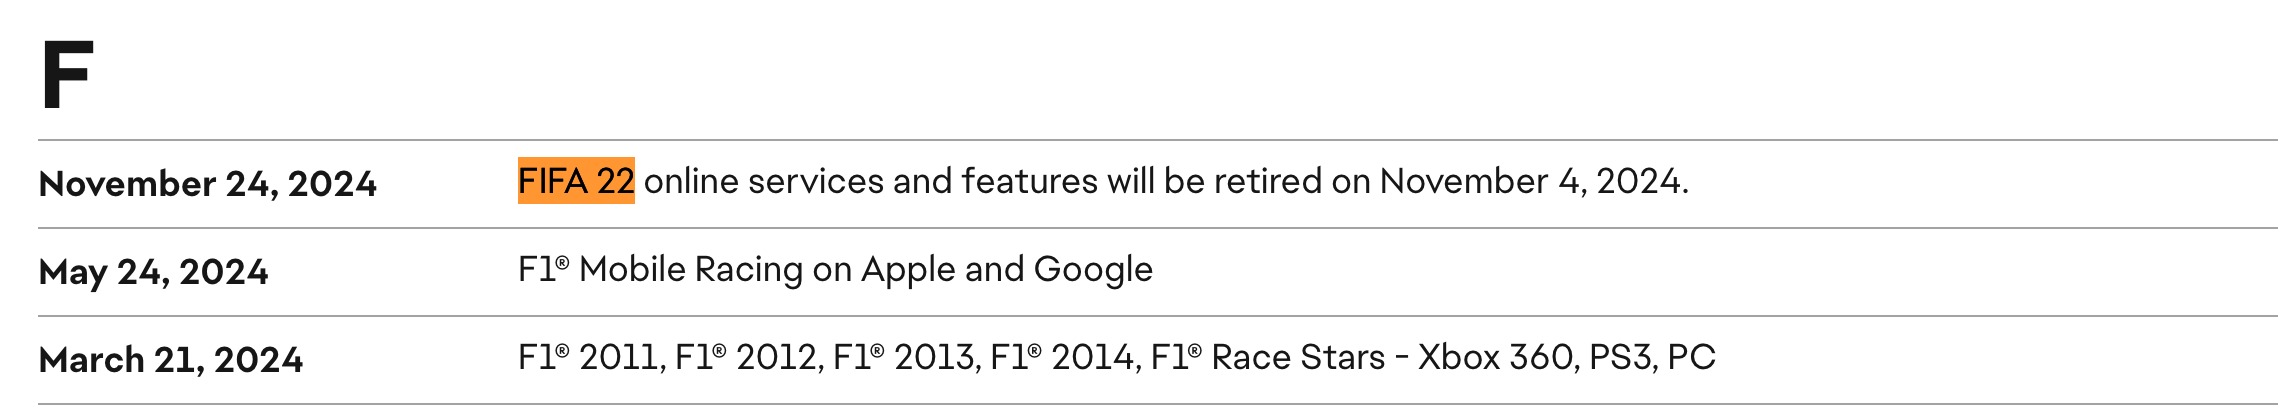 FIFA 22服務器關閉日期將在2024年11月4日或11月